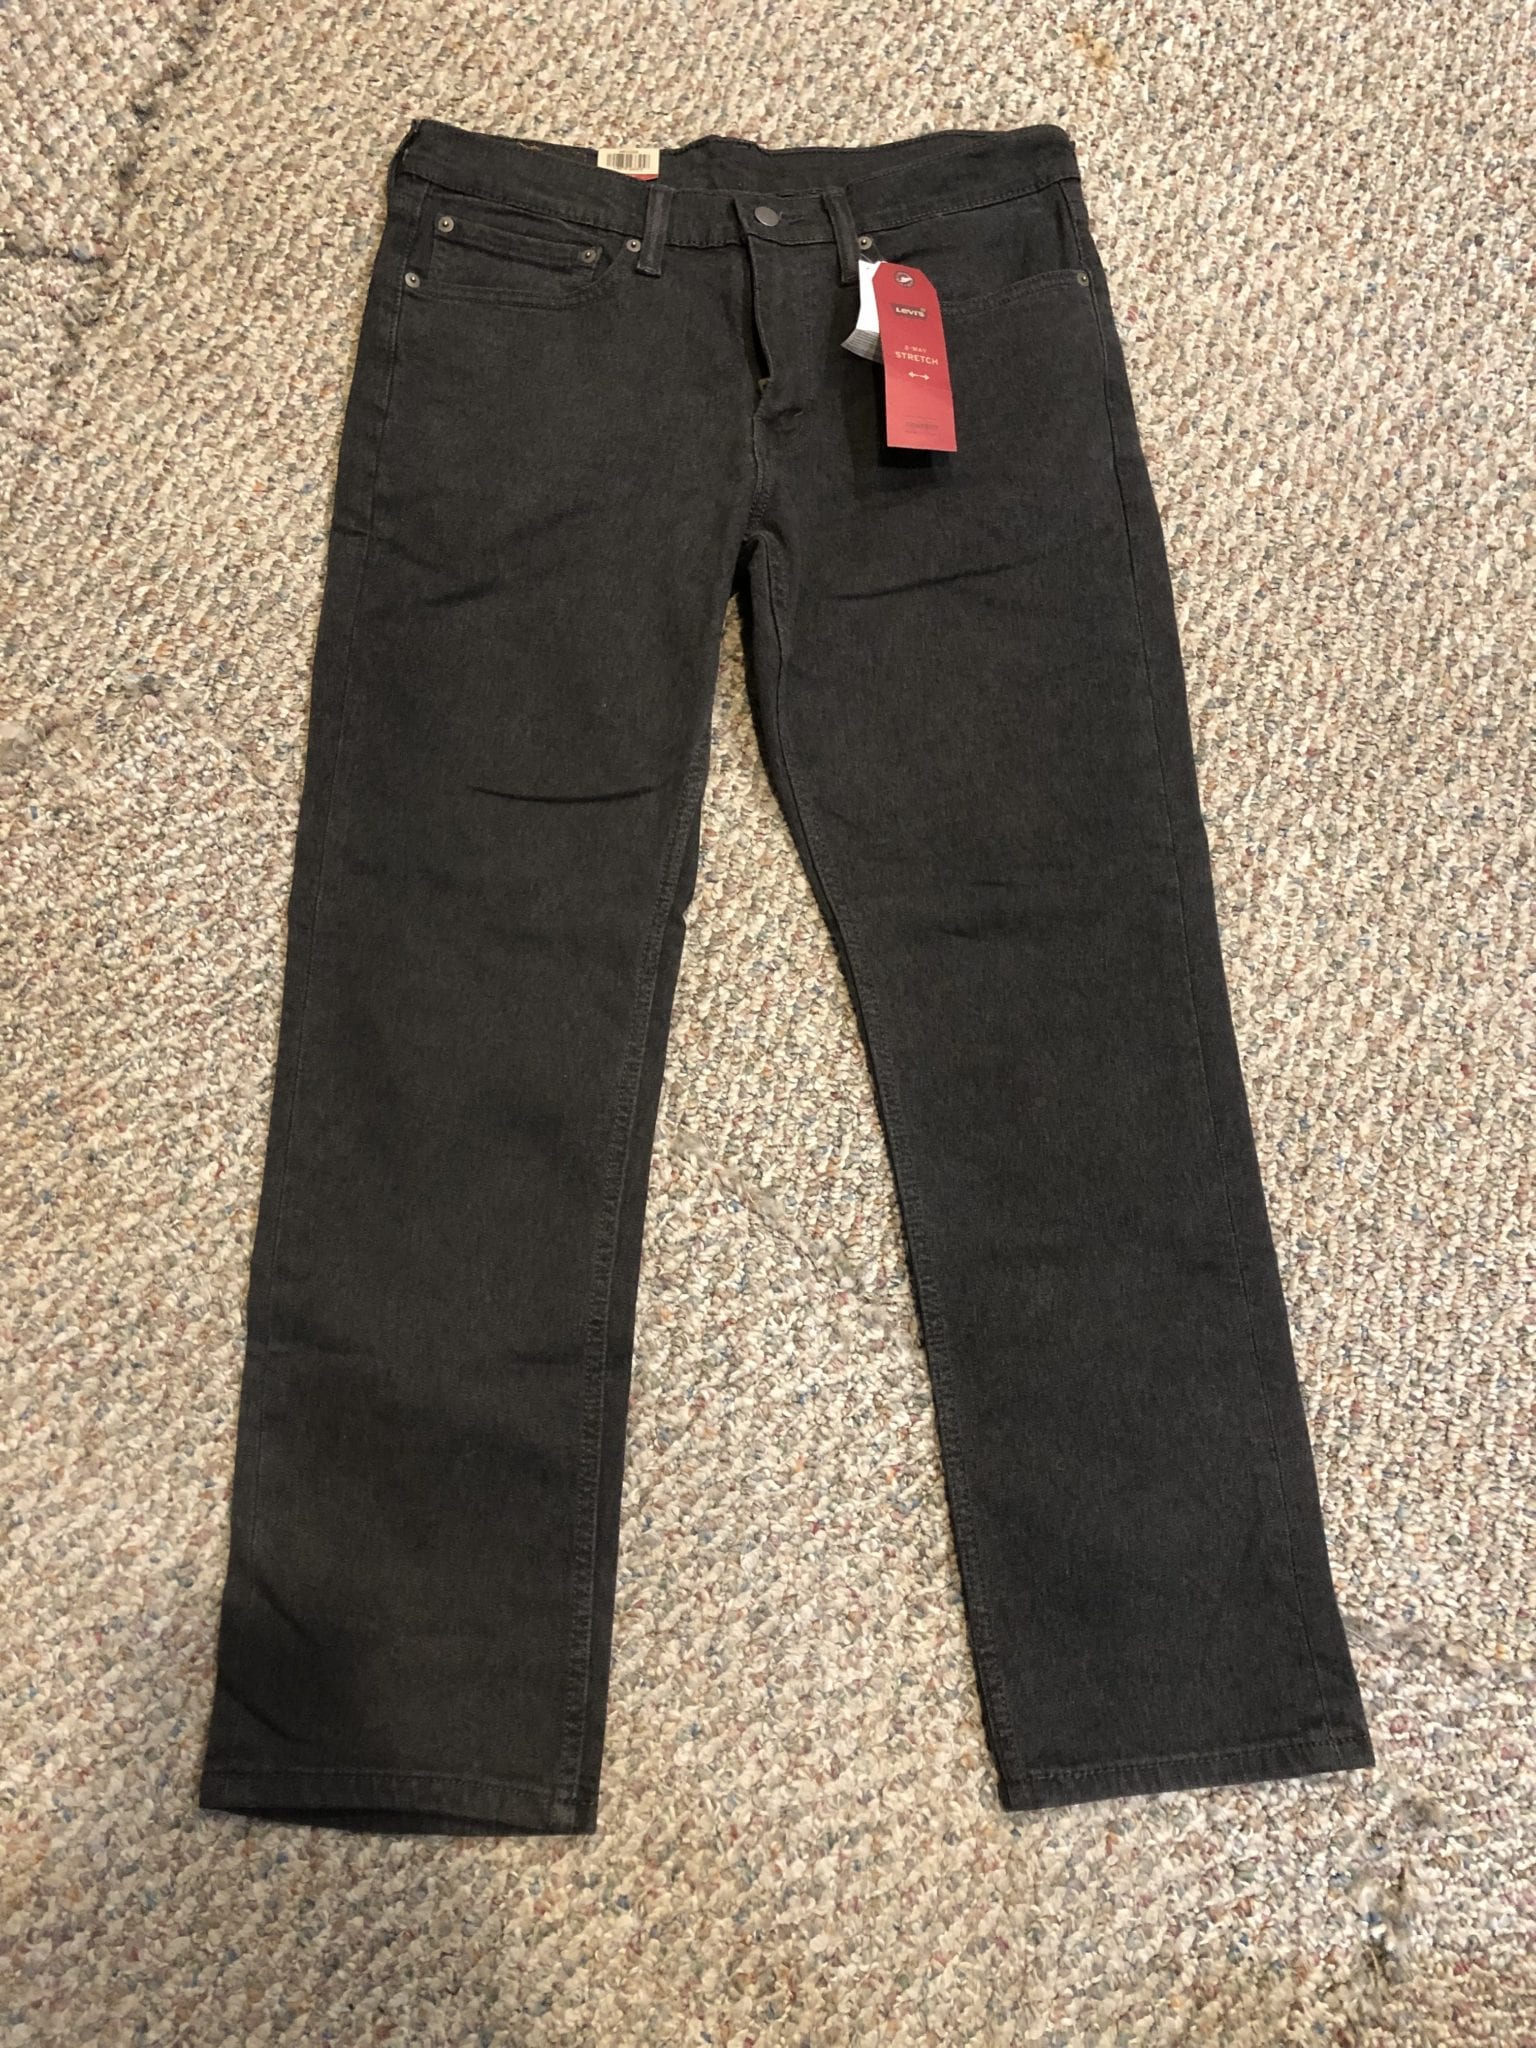 Levi's 511 34x30 jeans NEW - Fizno